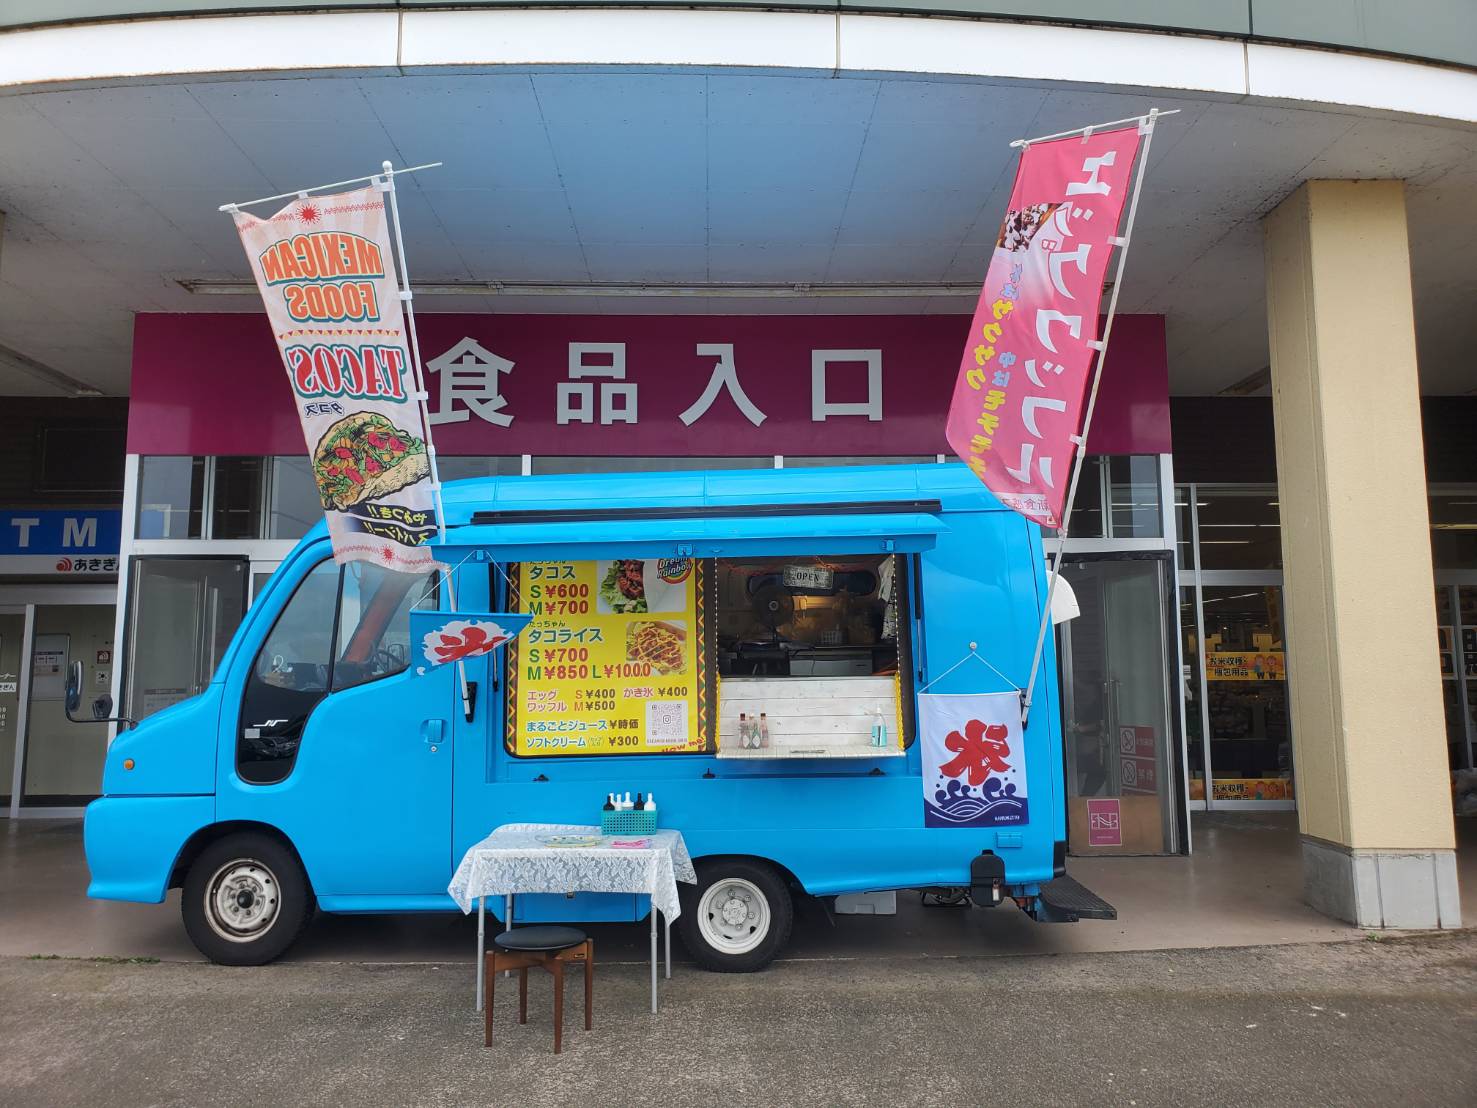 Dream Reinbow - 秋田の街に「おいしい」を運びます キッチンカー協会